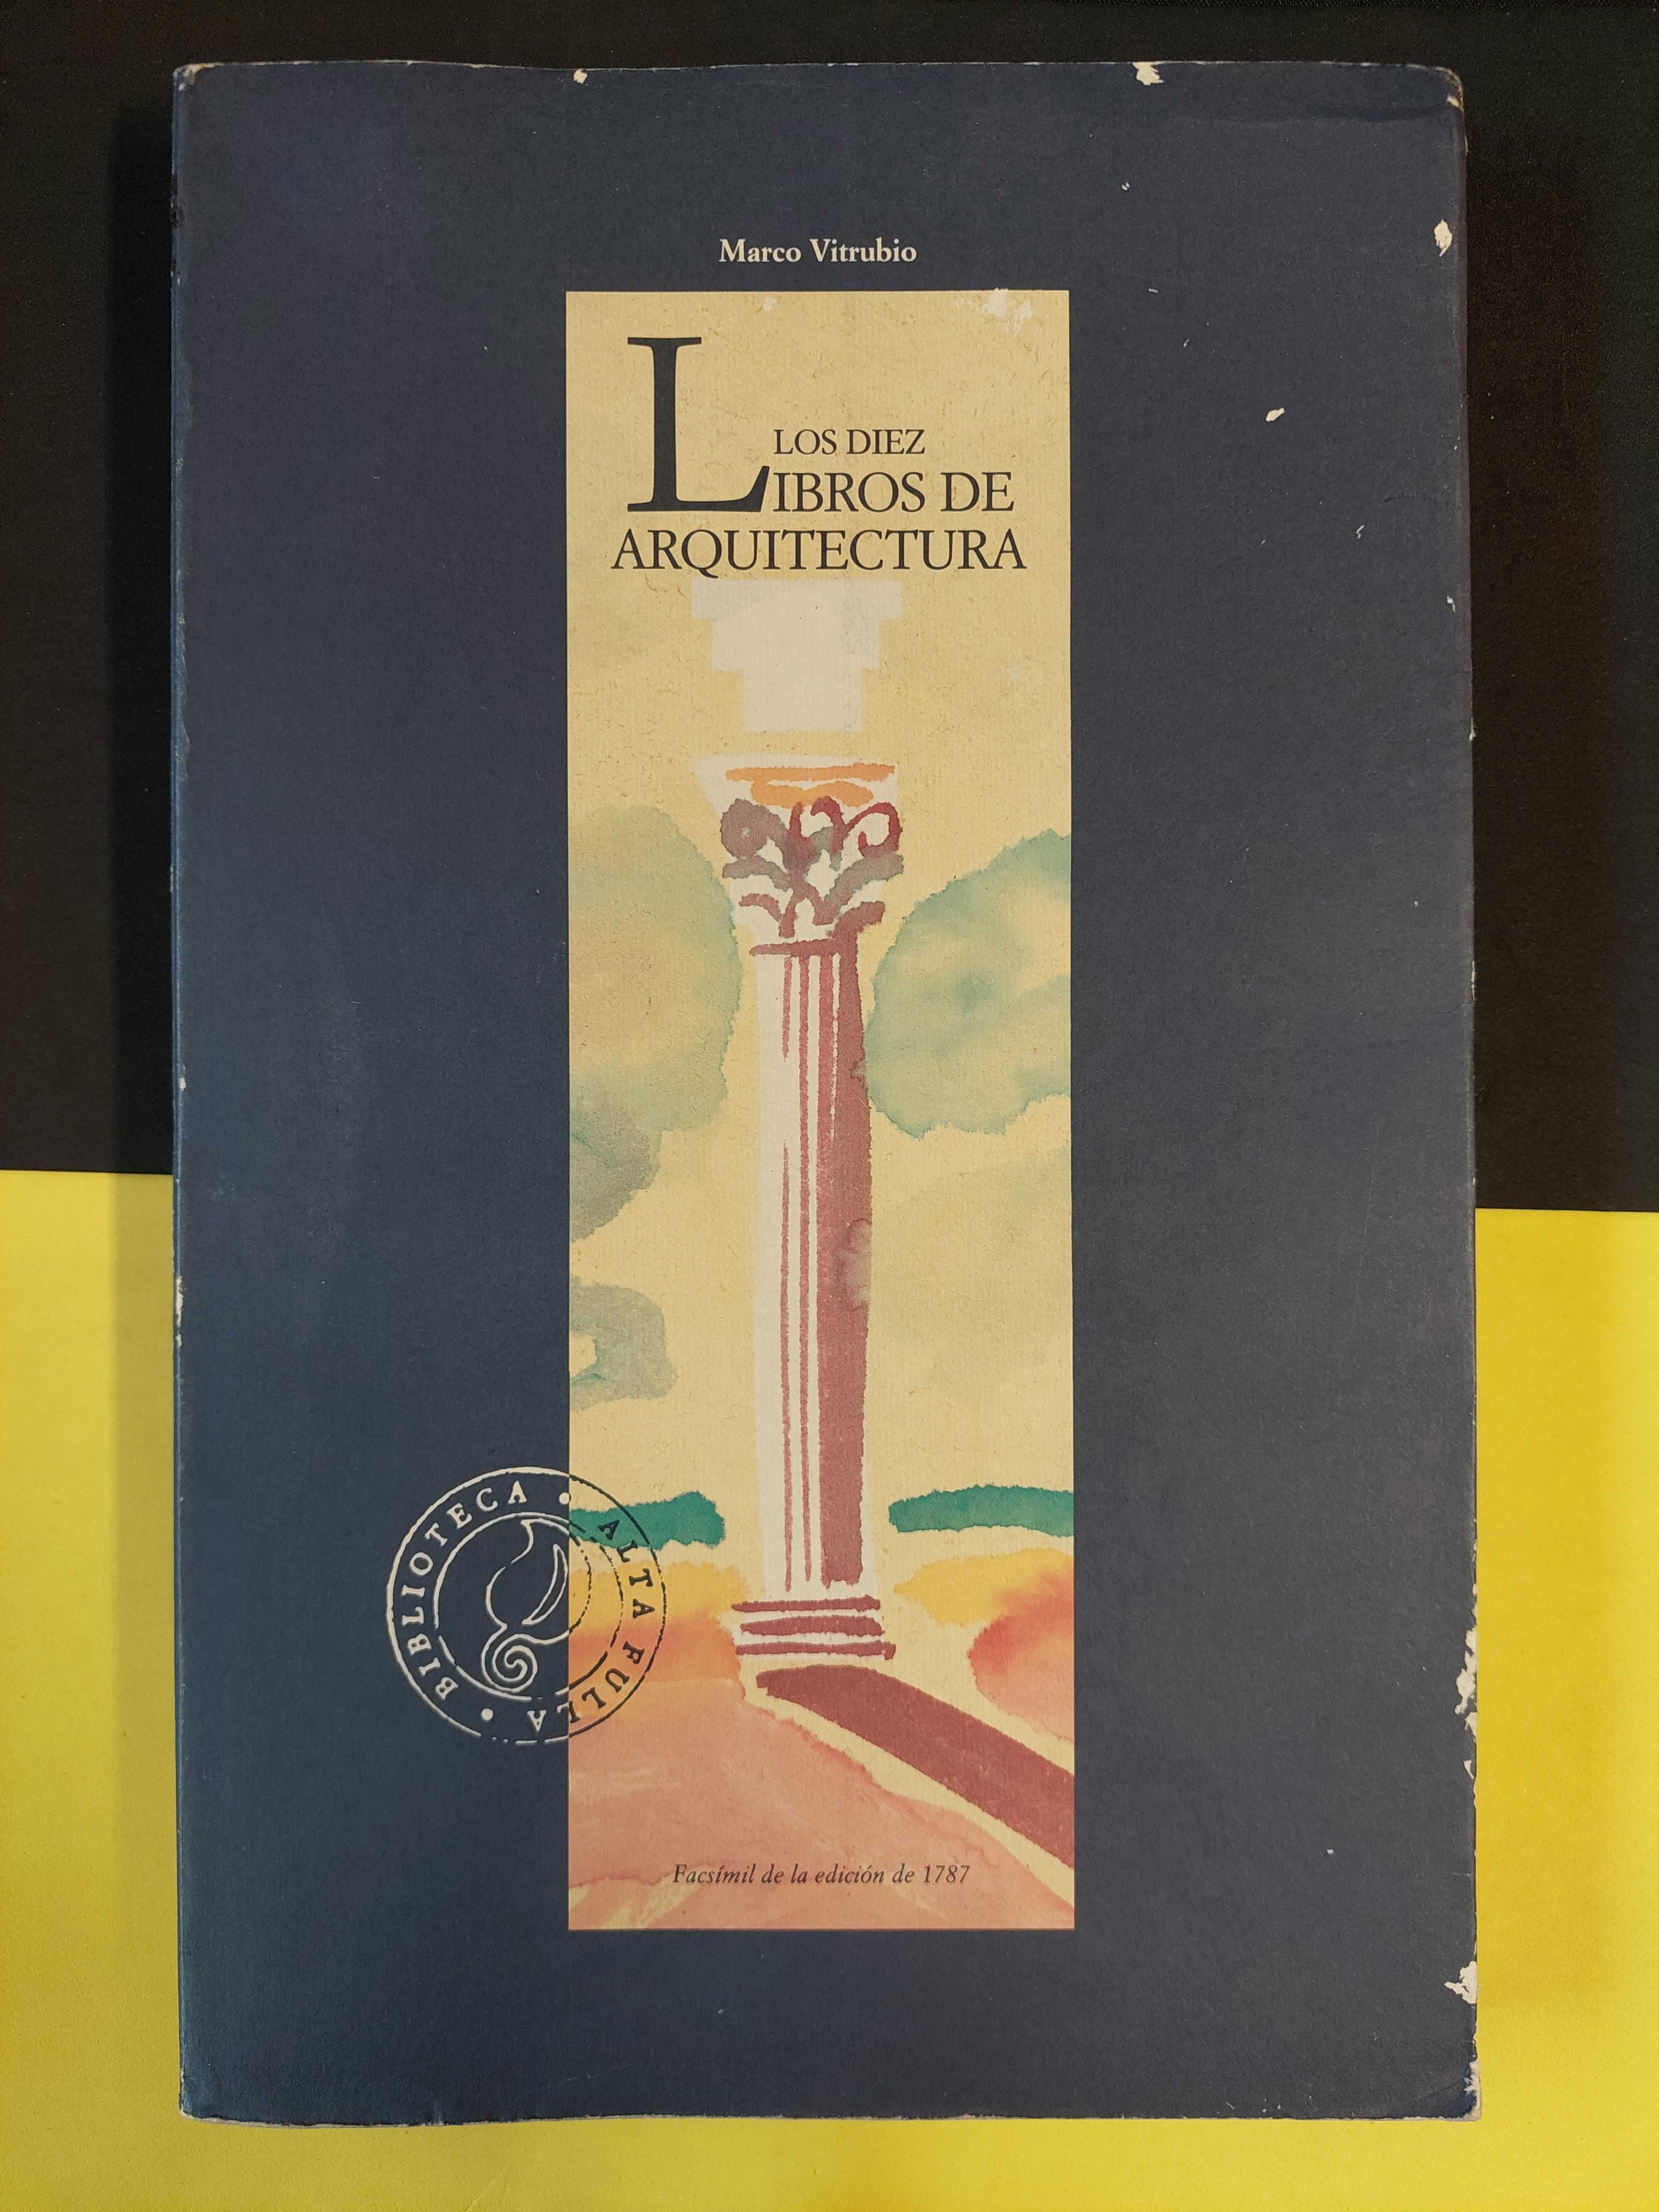 Marco Vitrubio - Los diez libros de arquitetura